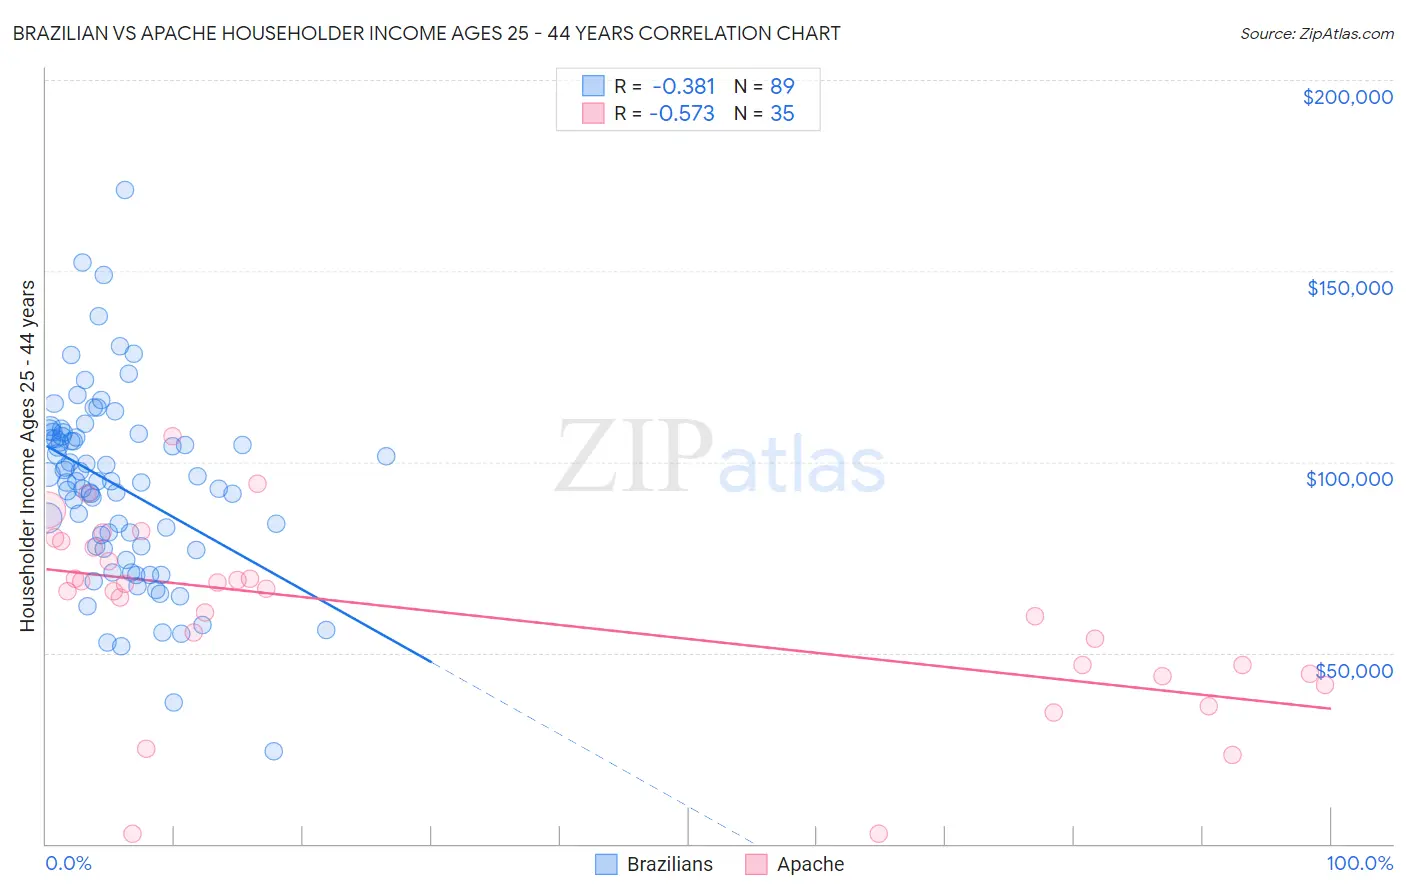 Brazilian vs Apache Householder Income Ages 25 - 44 years